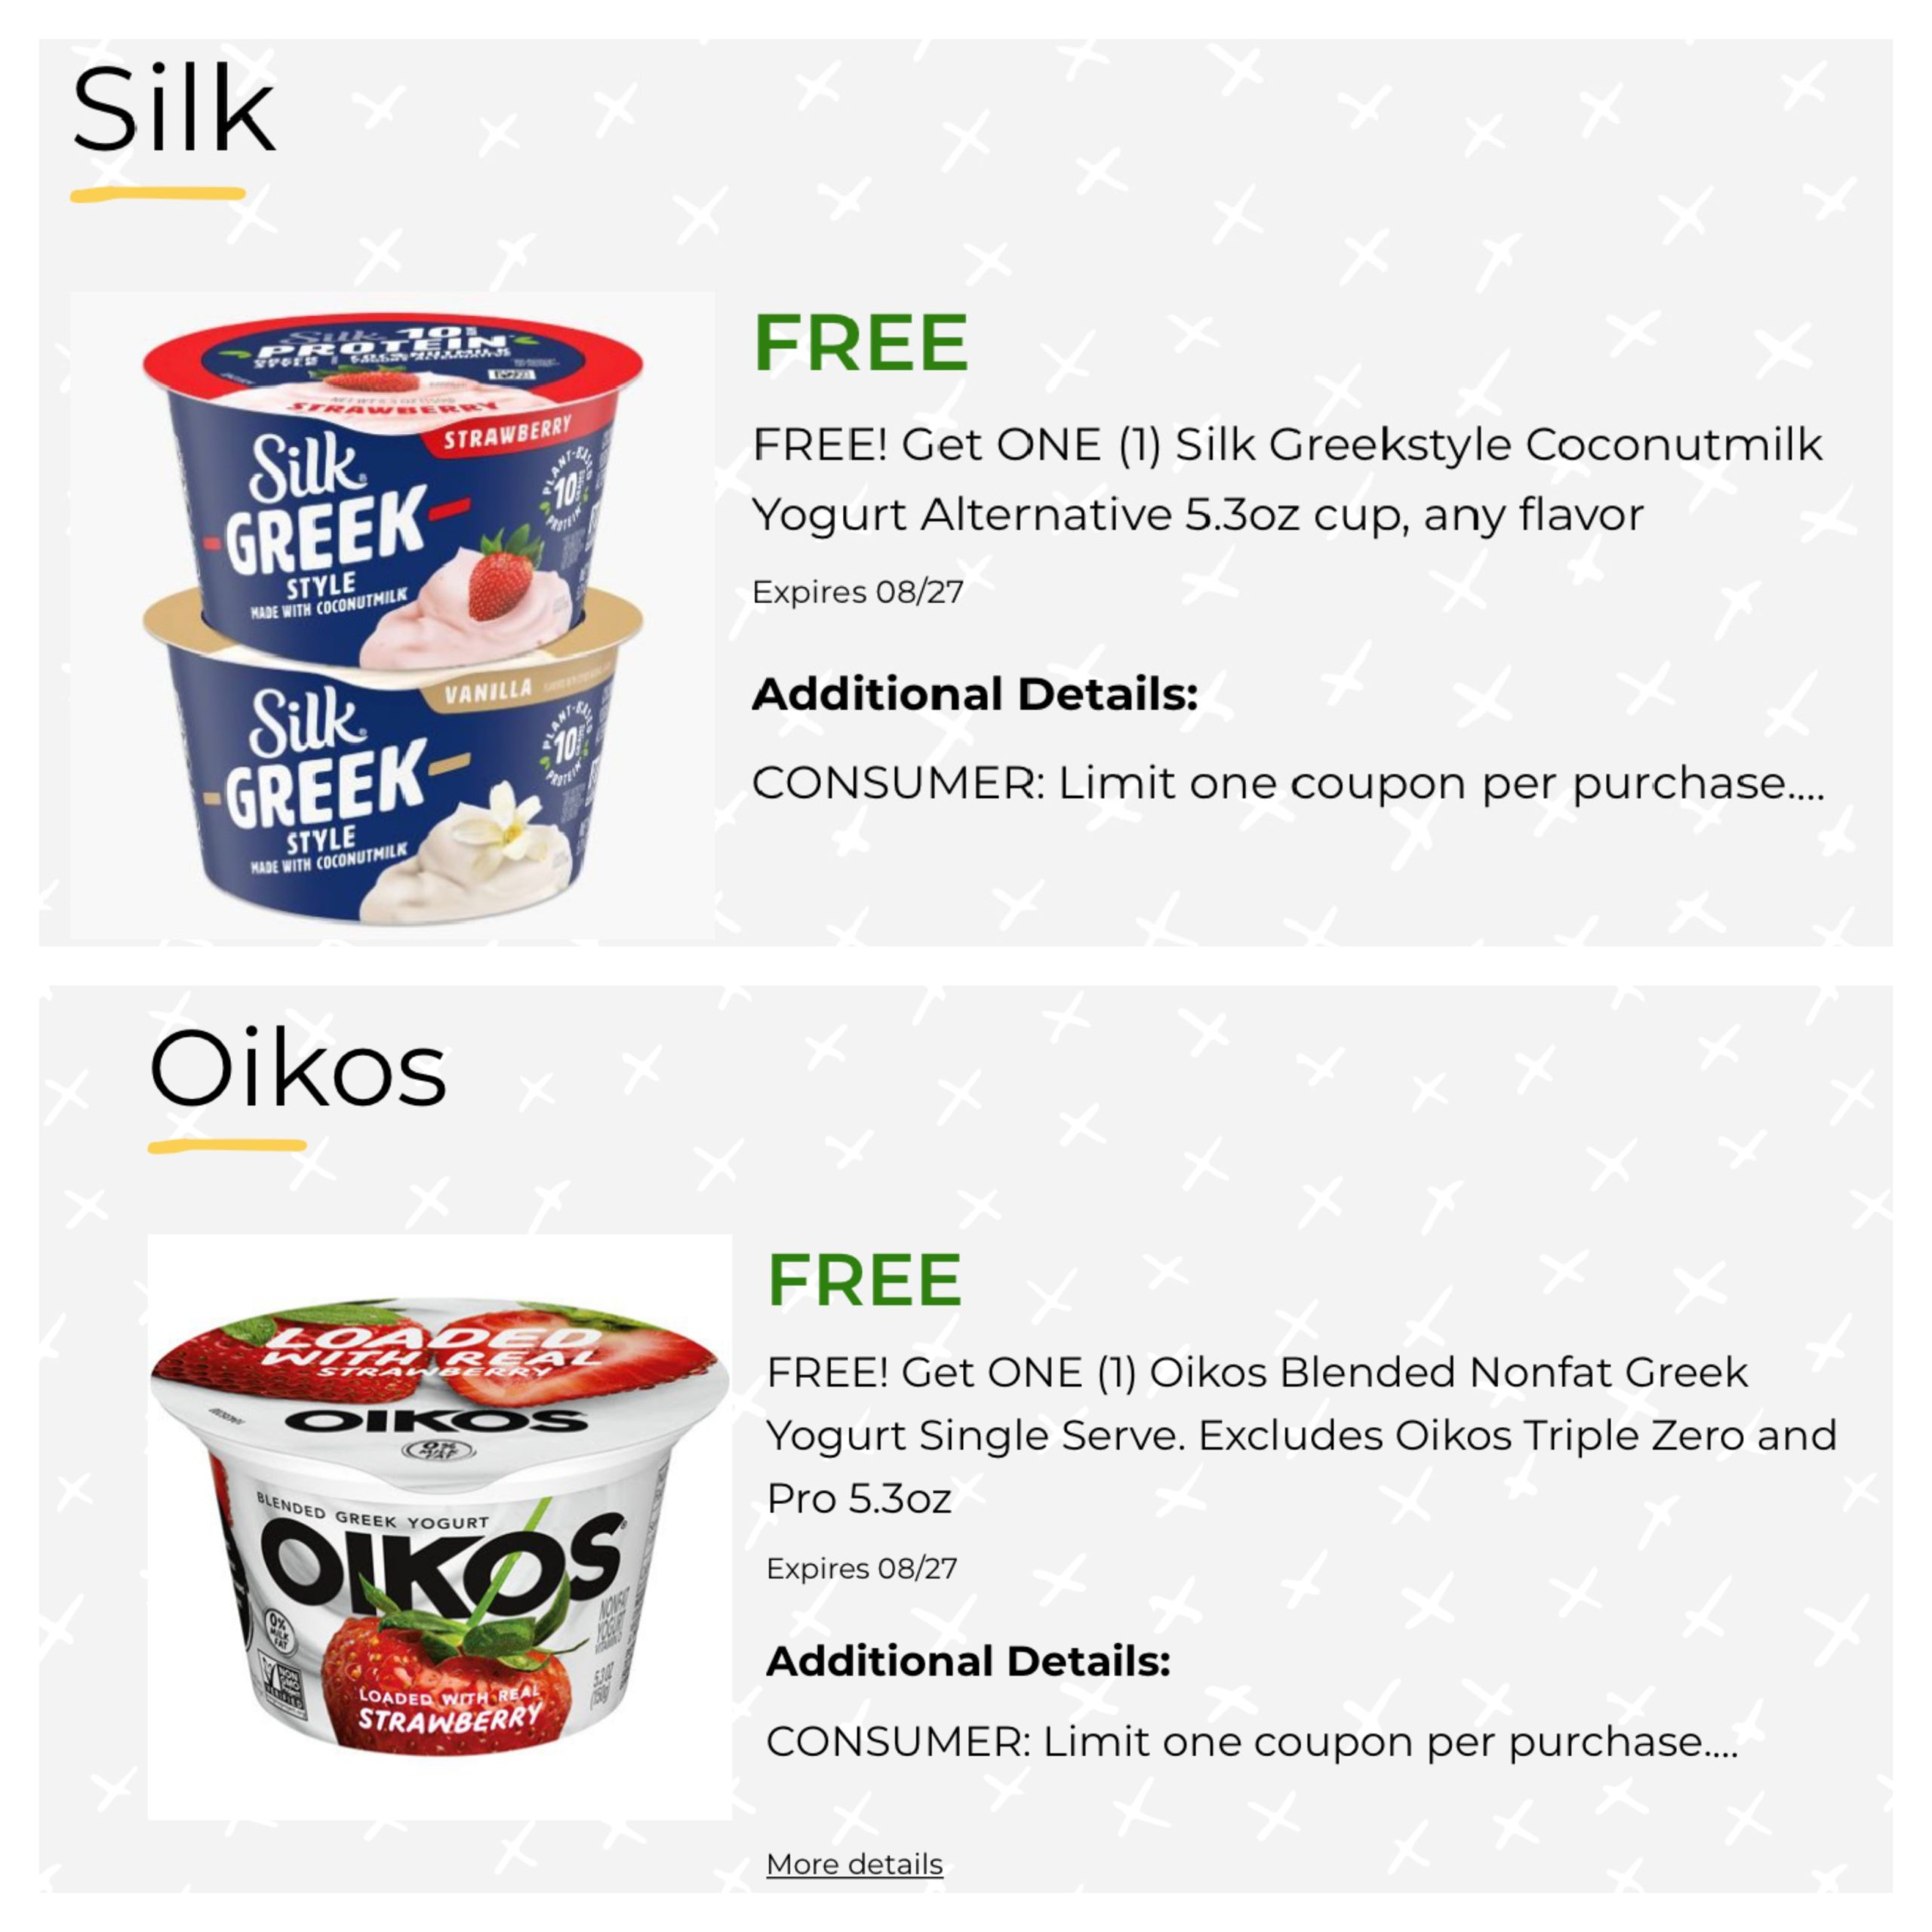 FREE Silk and Oikos Greek Yogurt at Publix